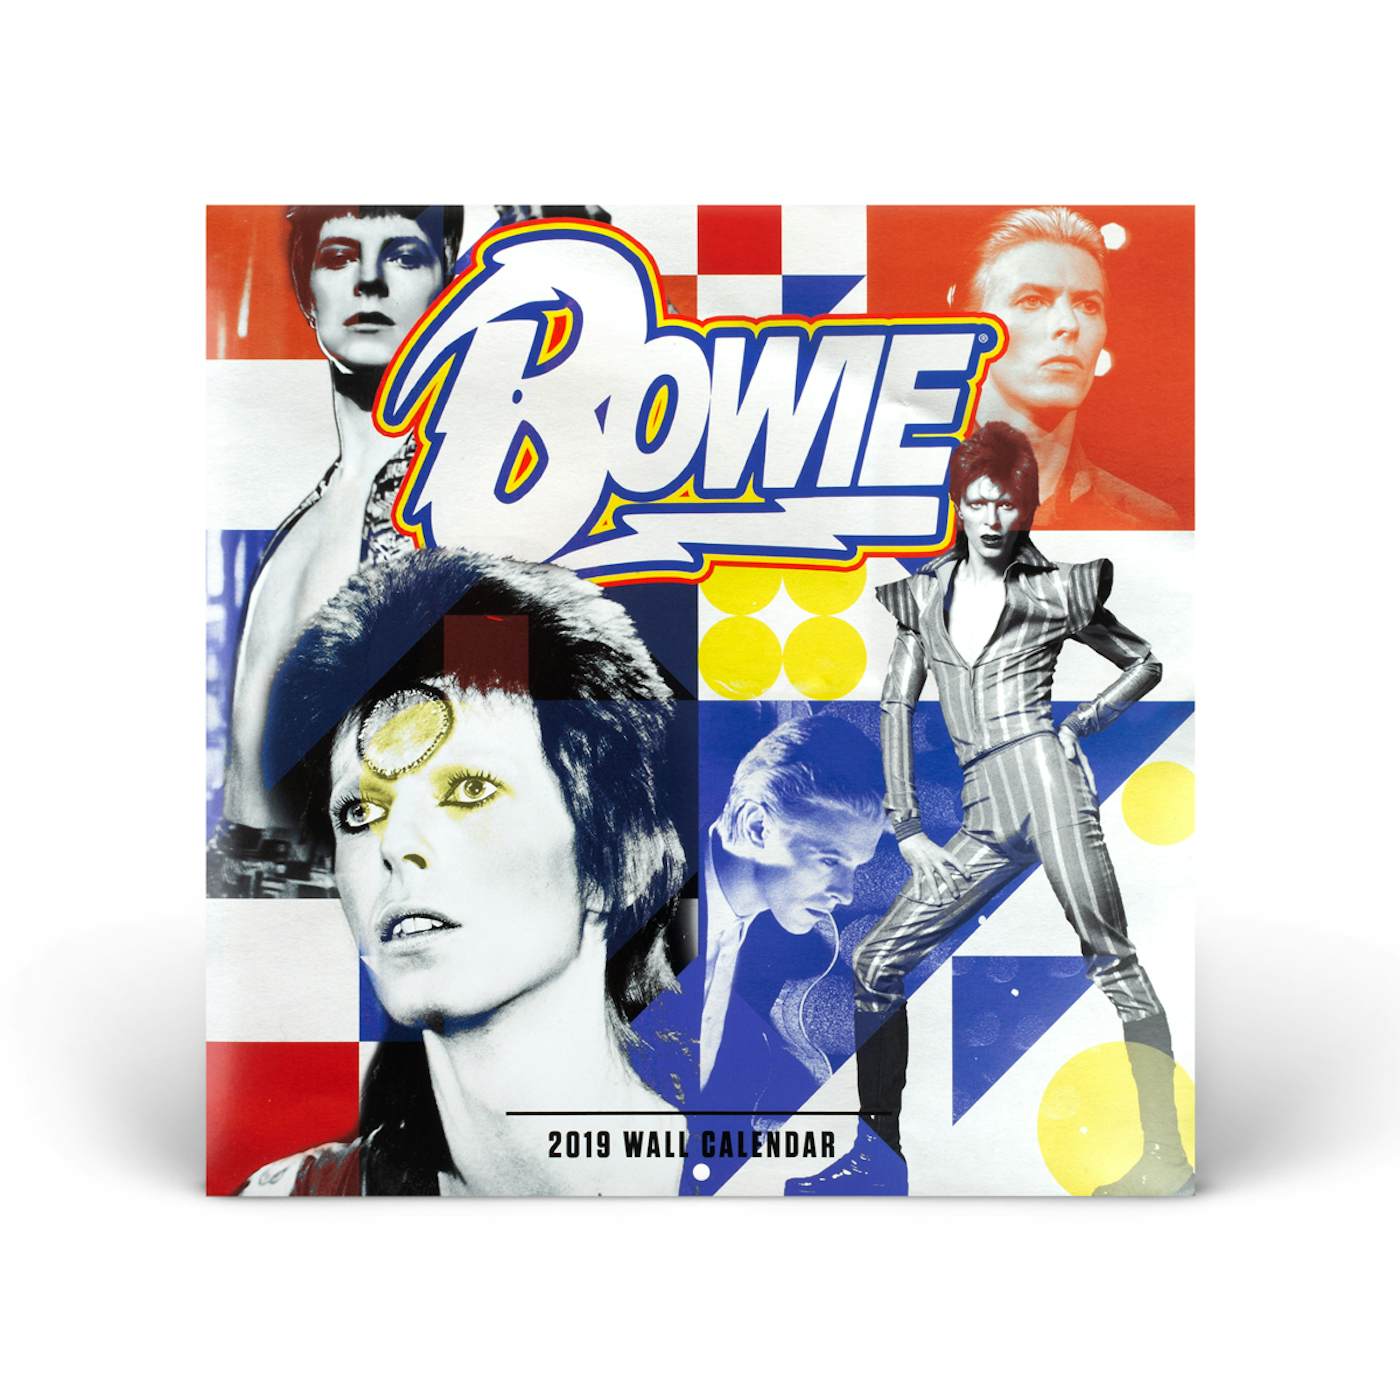 David Bowie 2019 Wall Calendar